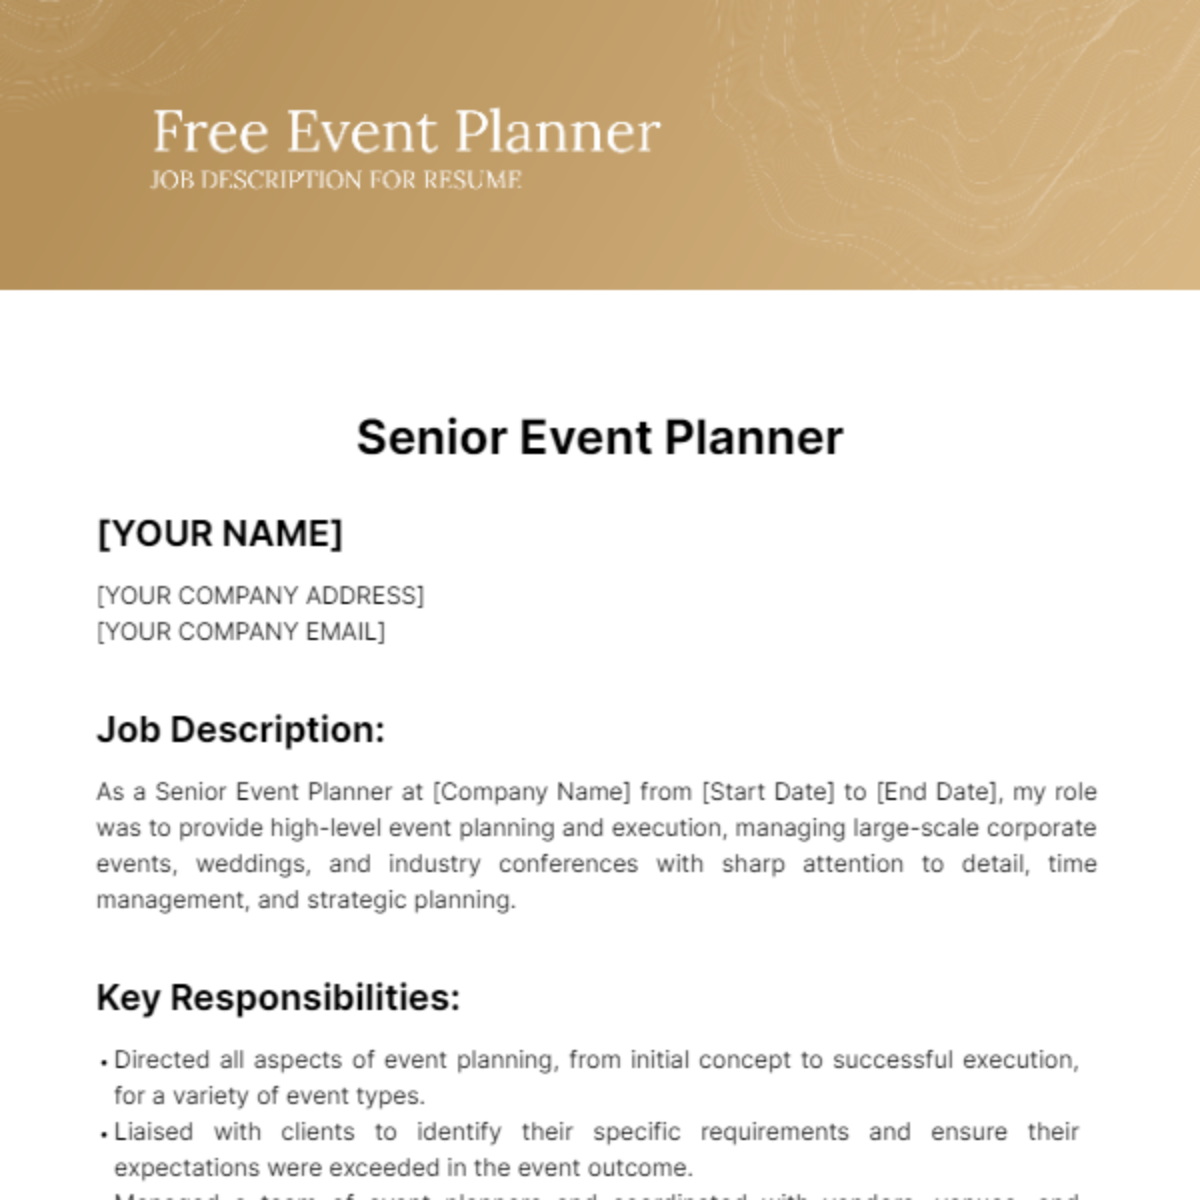 Free Event Planner Job Description for Resume Template